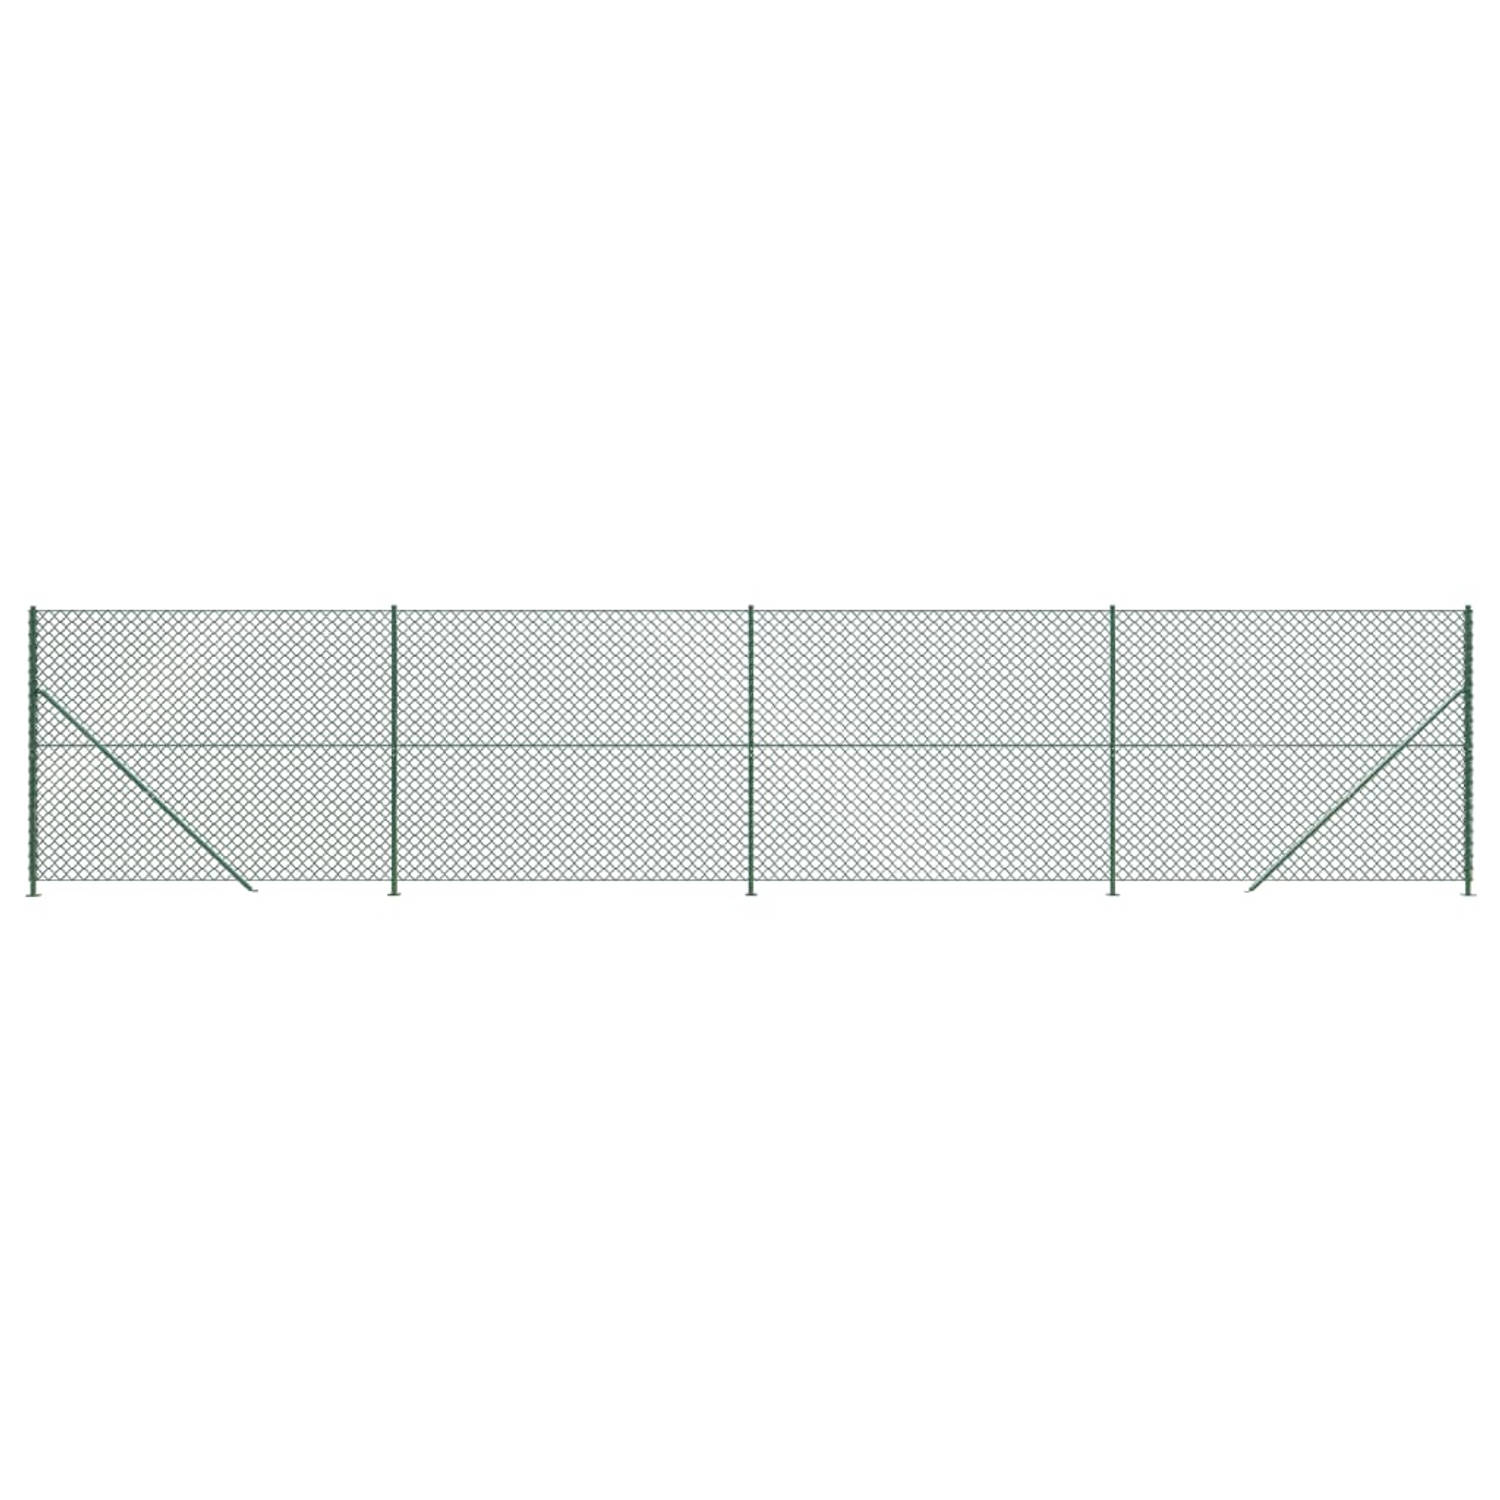 The Living Store Gaashek Groen 2x10m - Gegalvaniseerd staal met PVC-coating